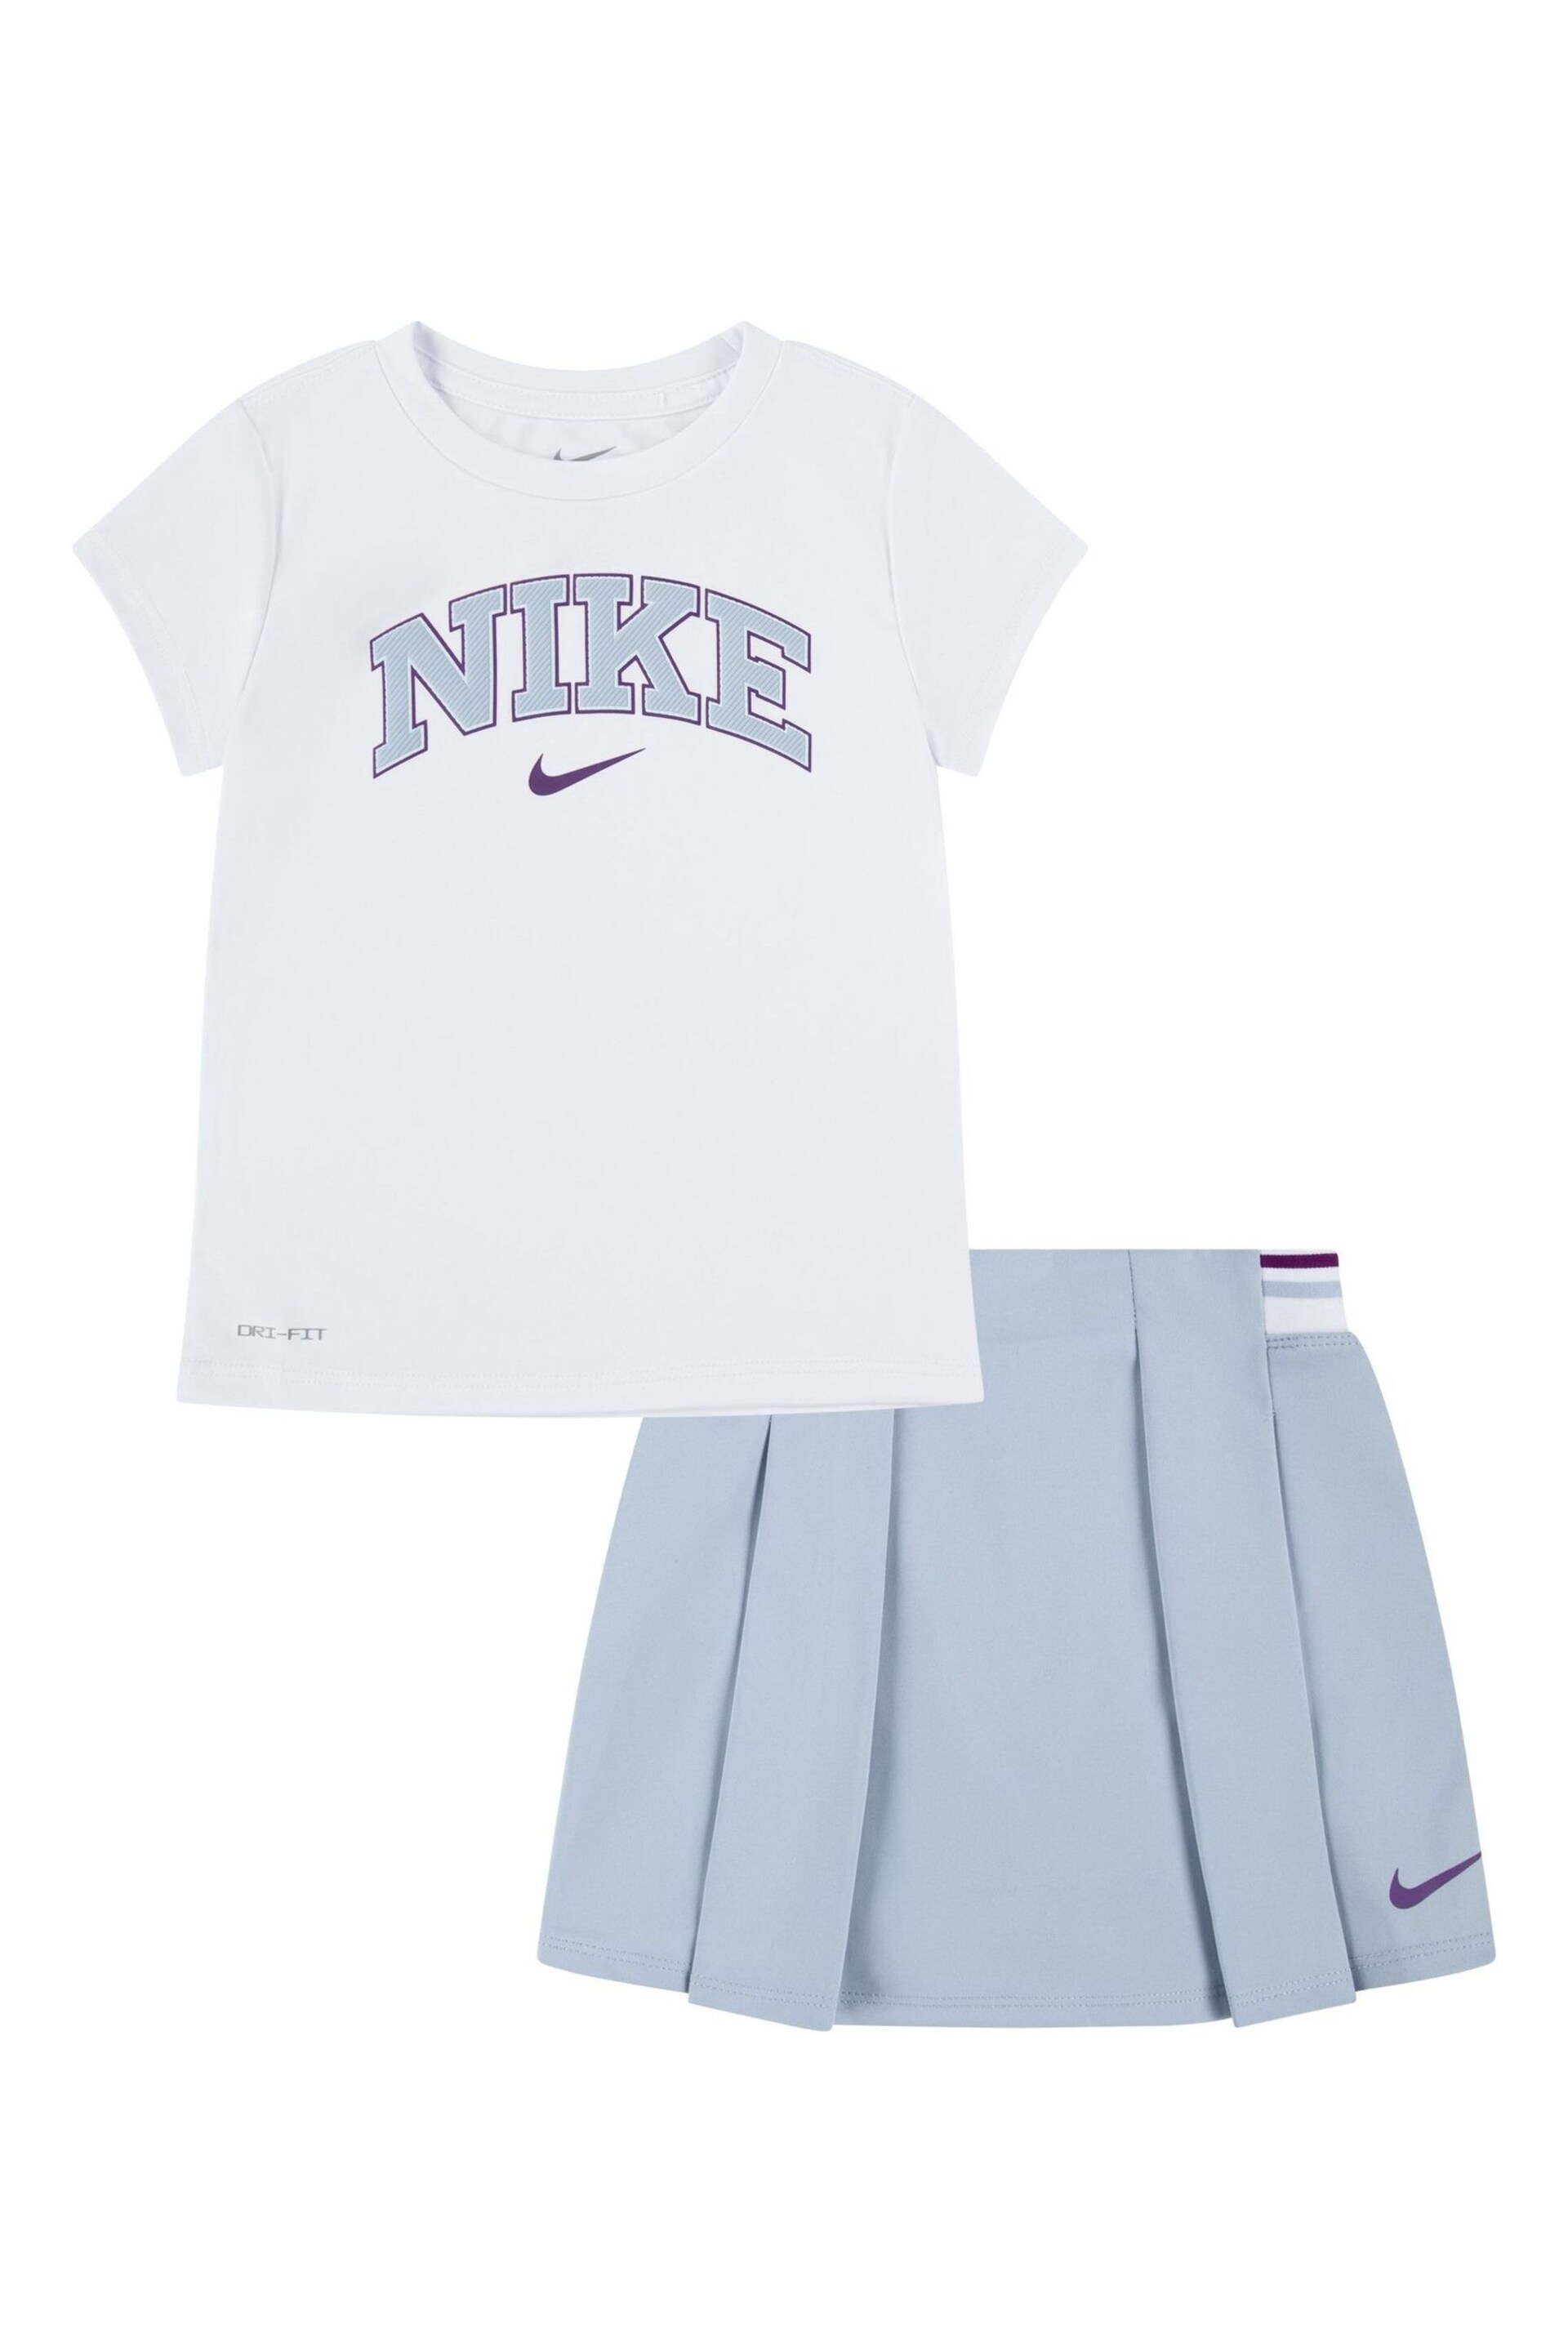 Nike Blue Little Kids Prep In Your Step T-Shirt and Skort Set - Image 1 of 2